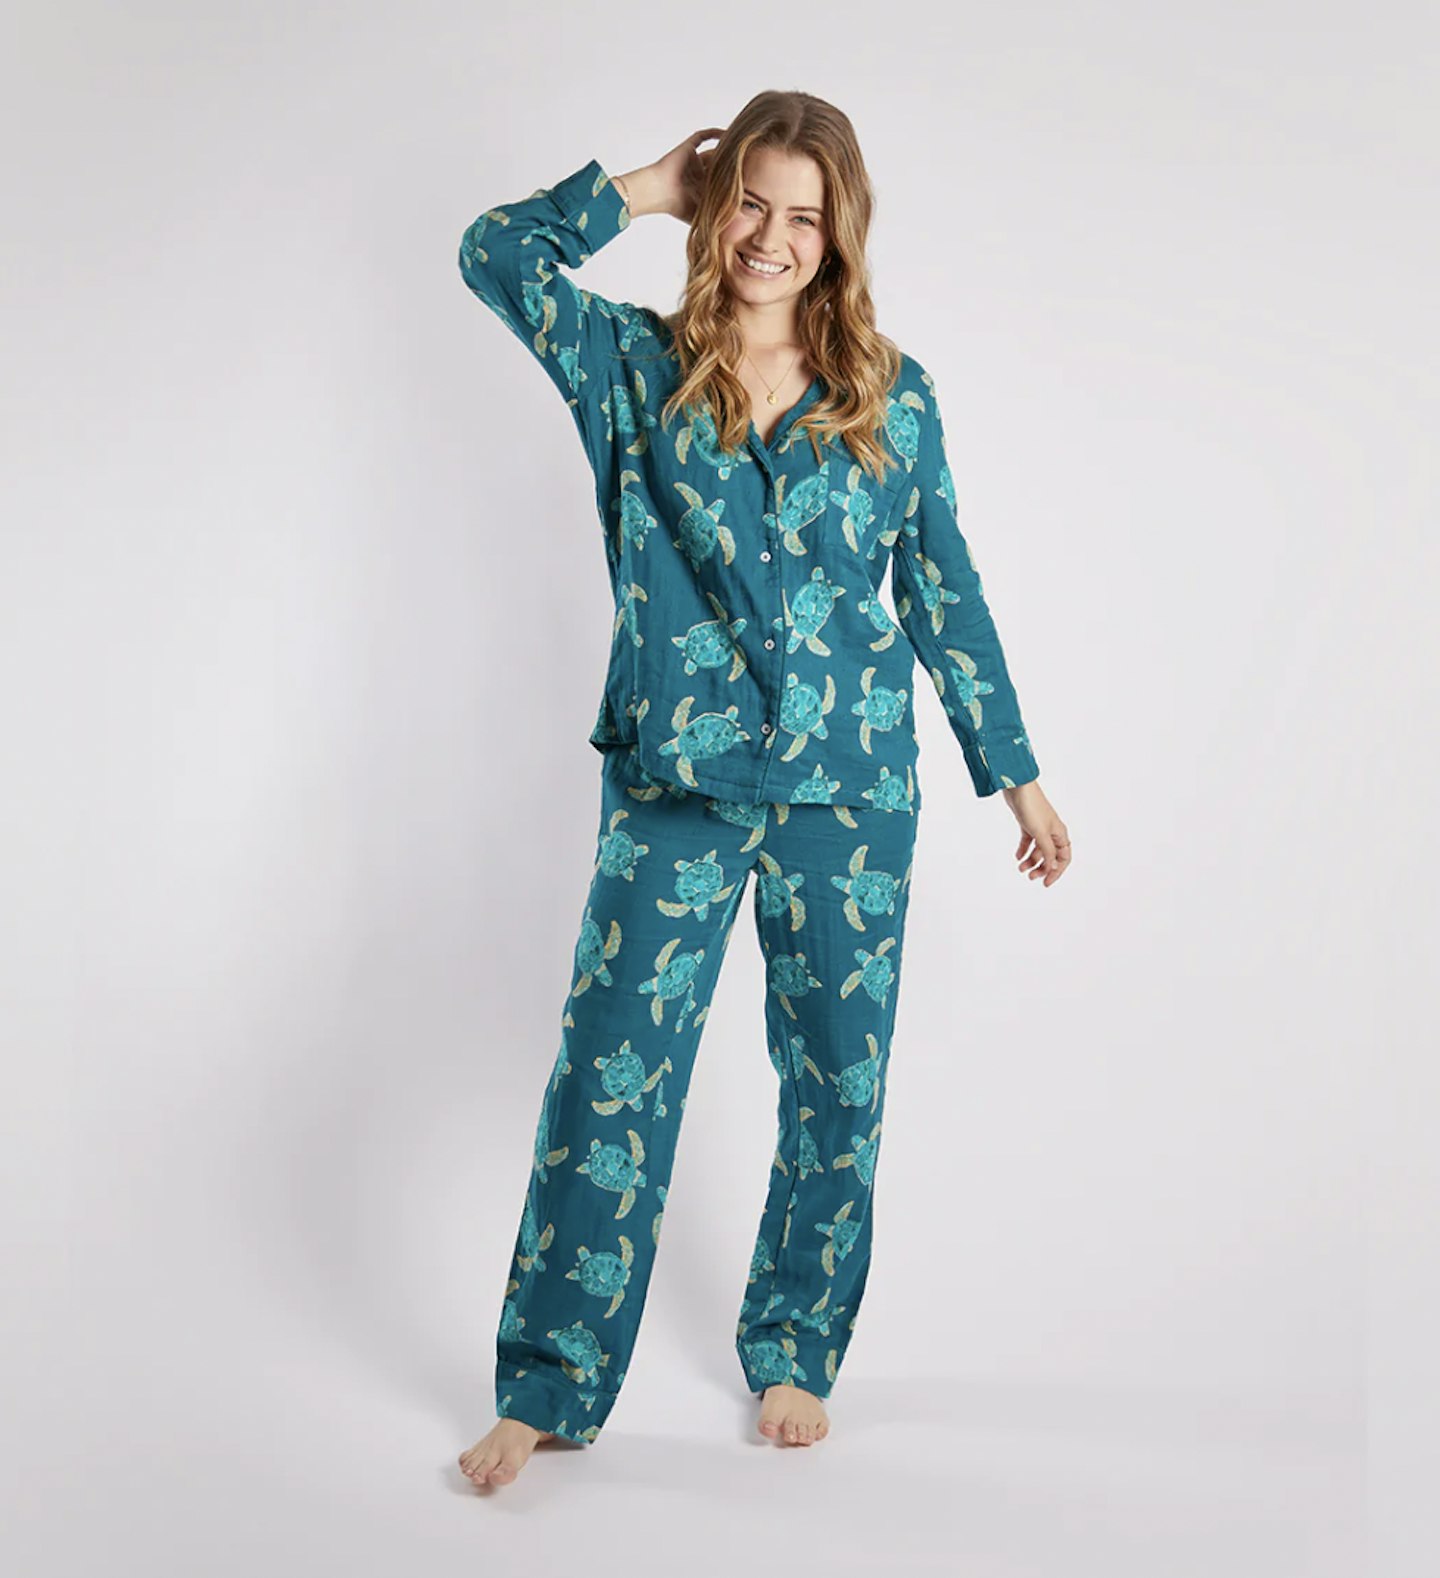 Turtle Conservation Pyjamas